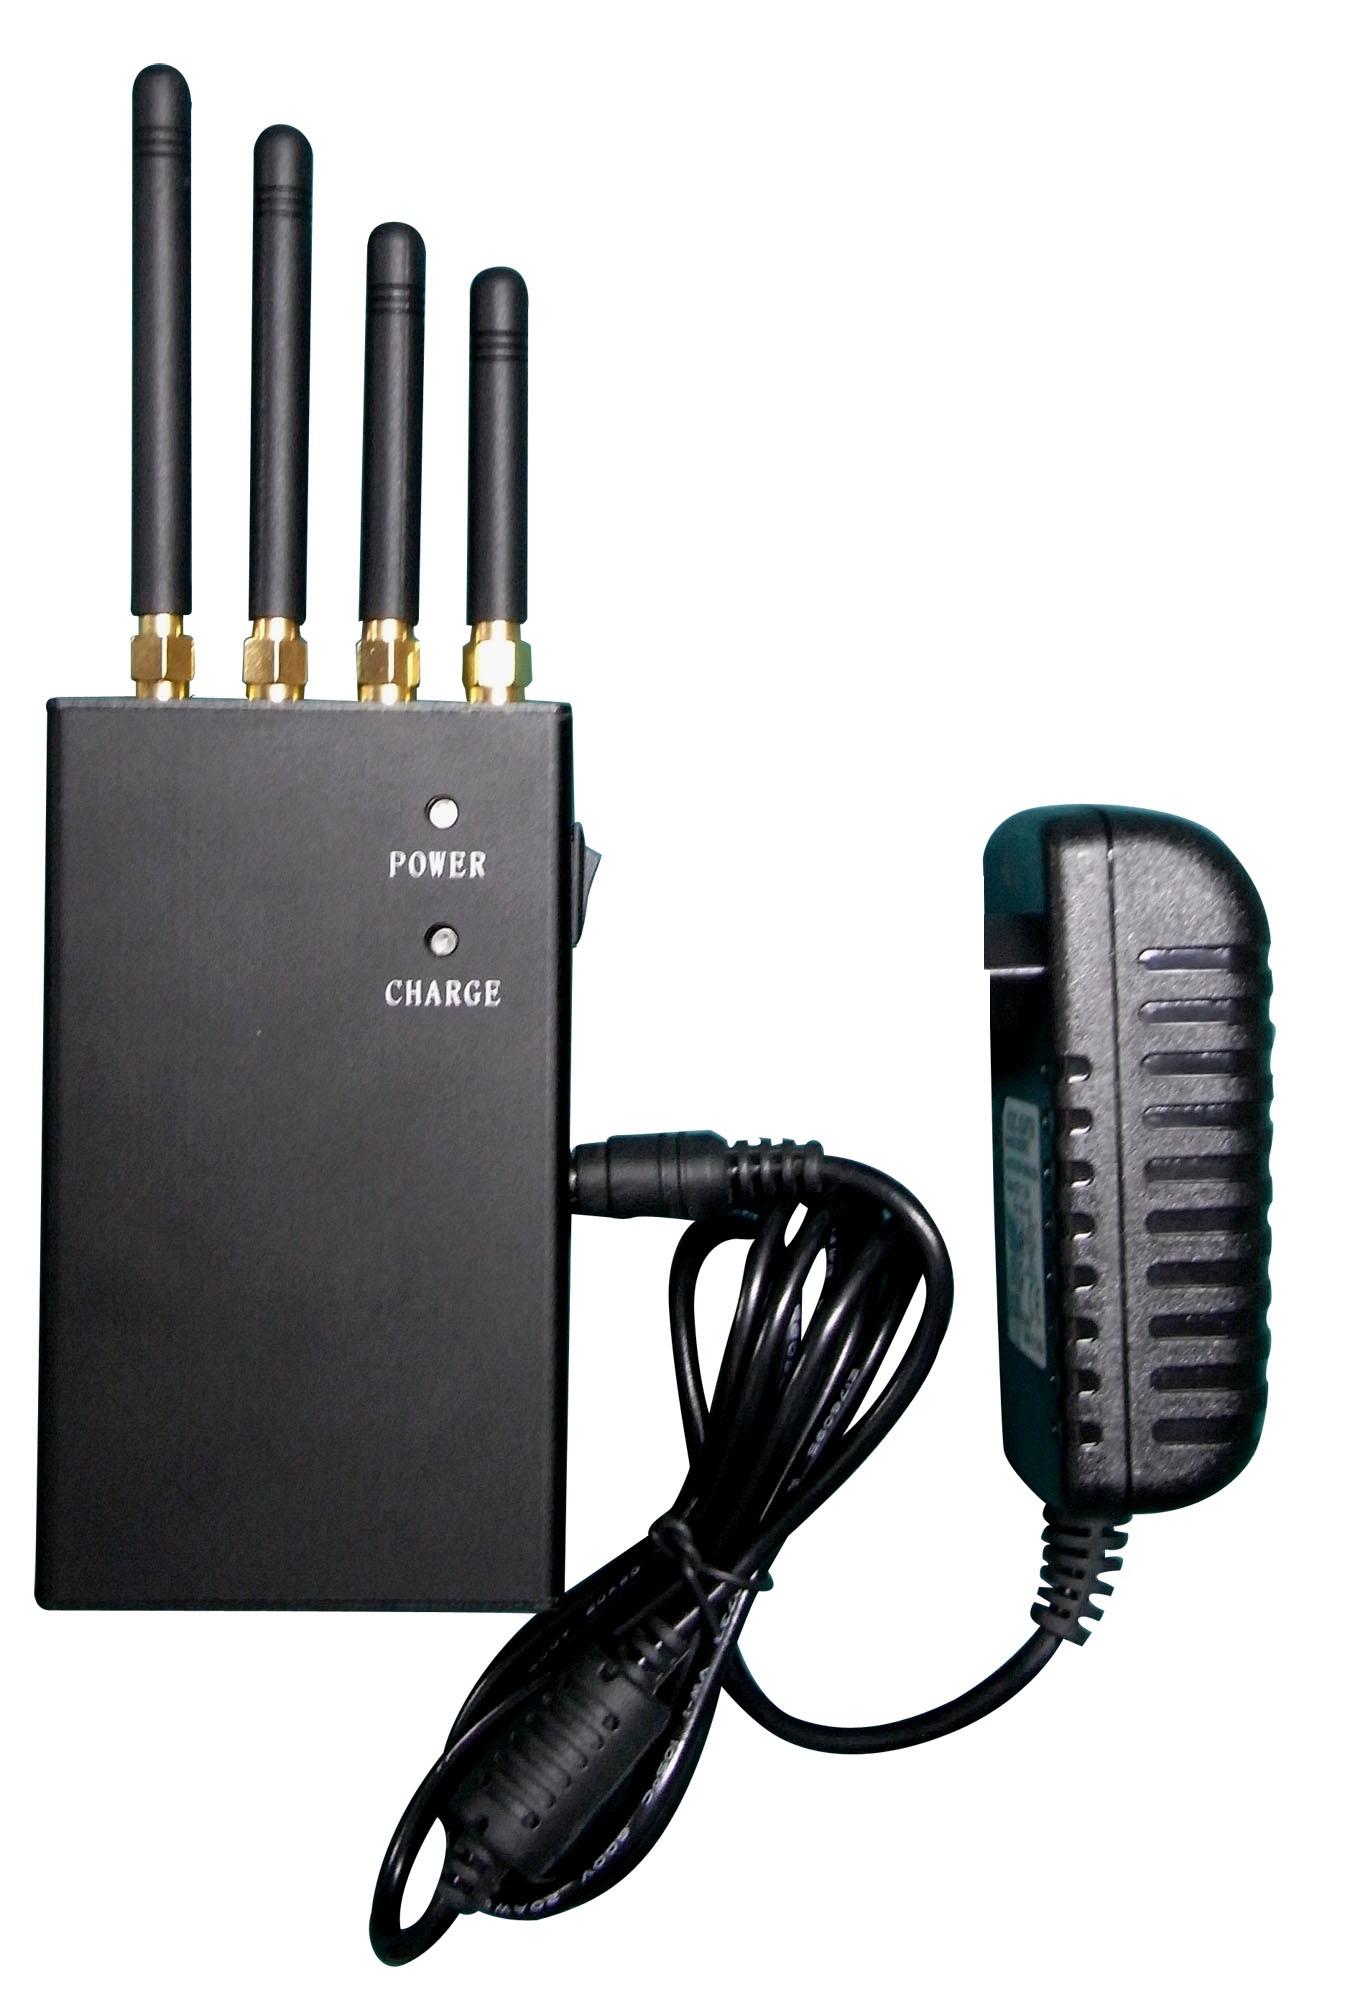 wireless security camera signal jammer